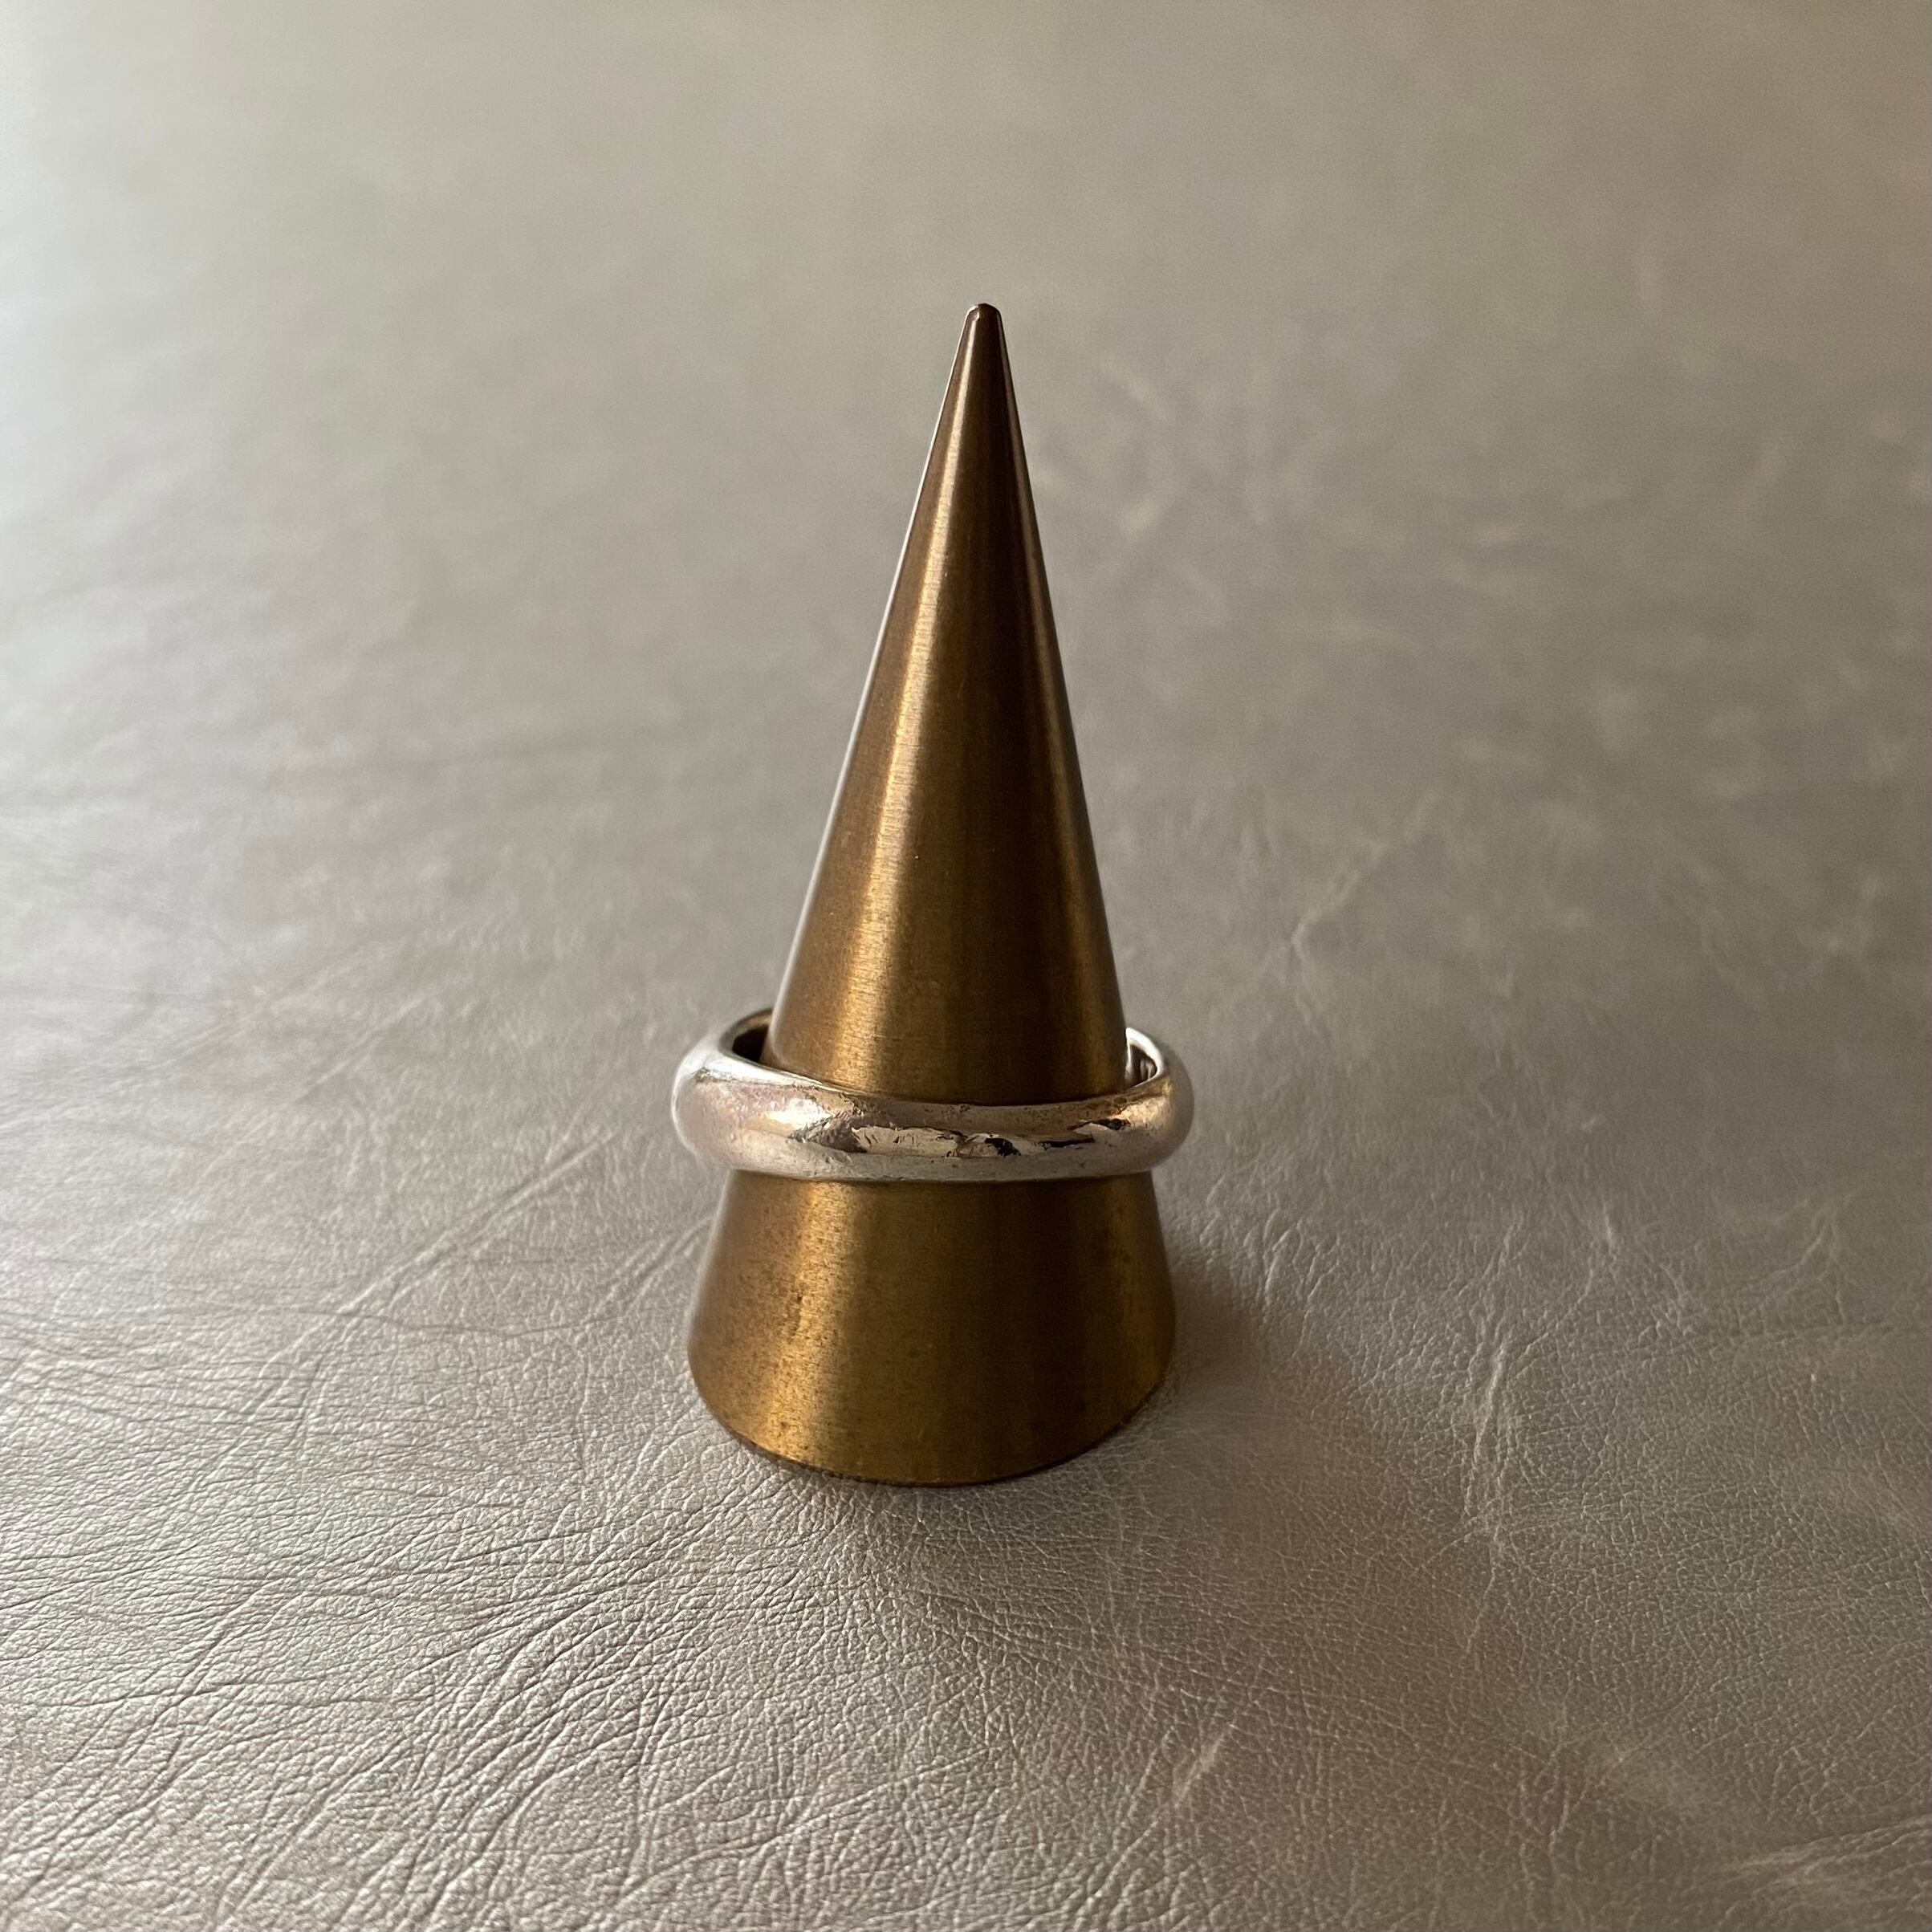 Used silver 925 artistic design ring ユーズド シルバー 925